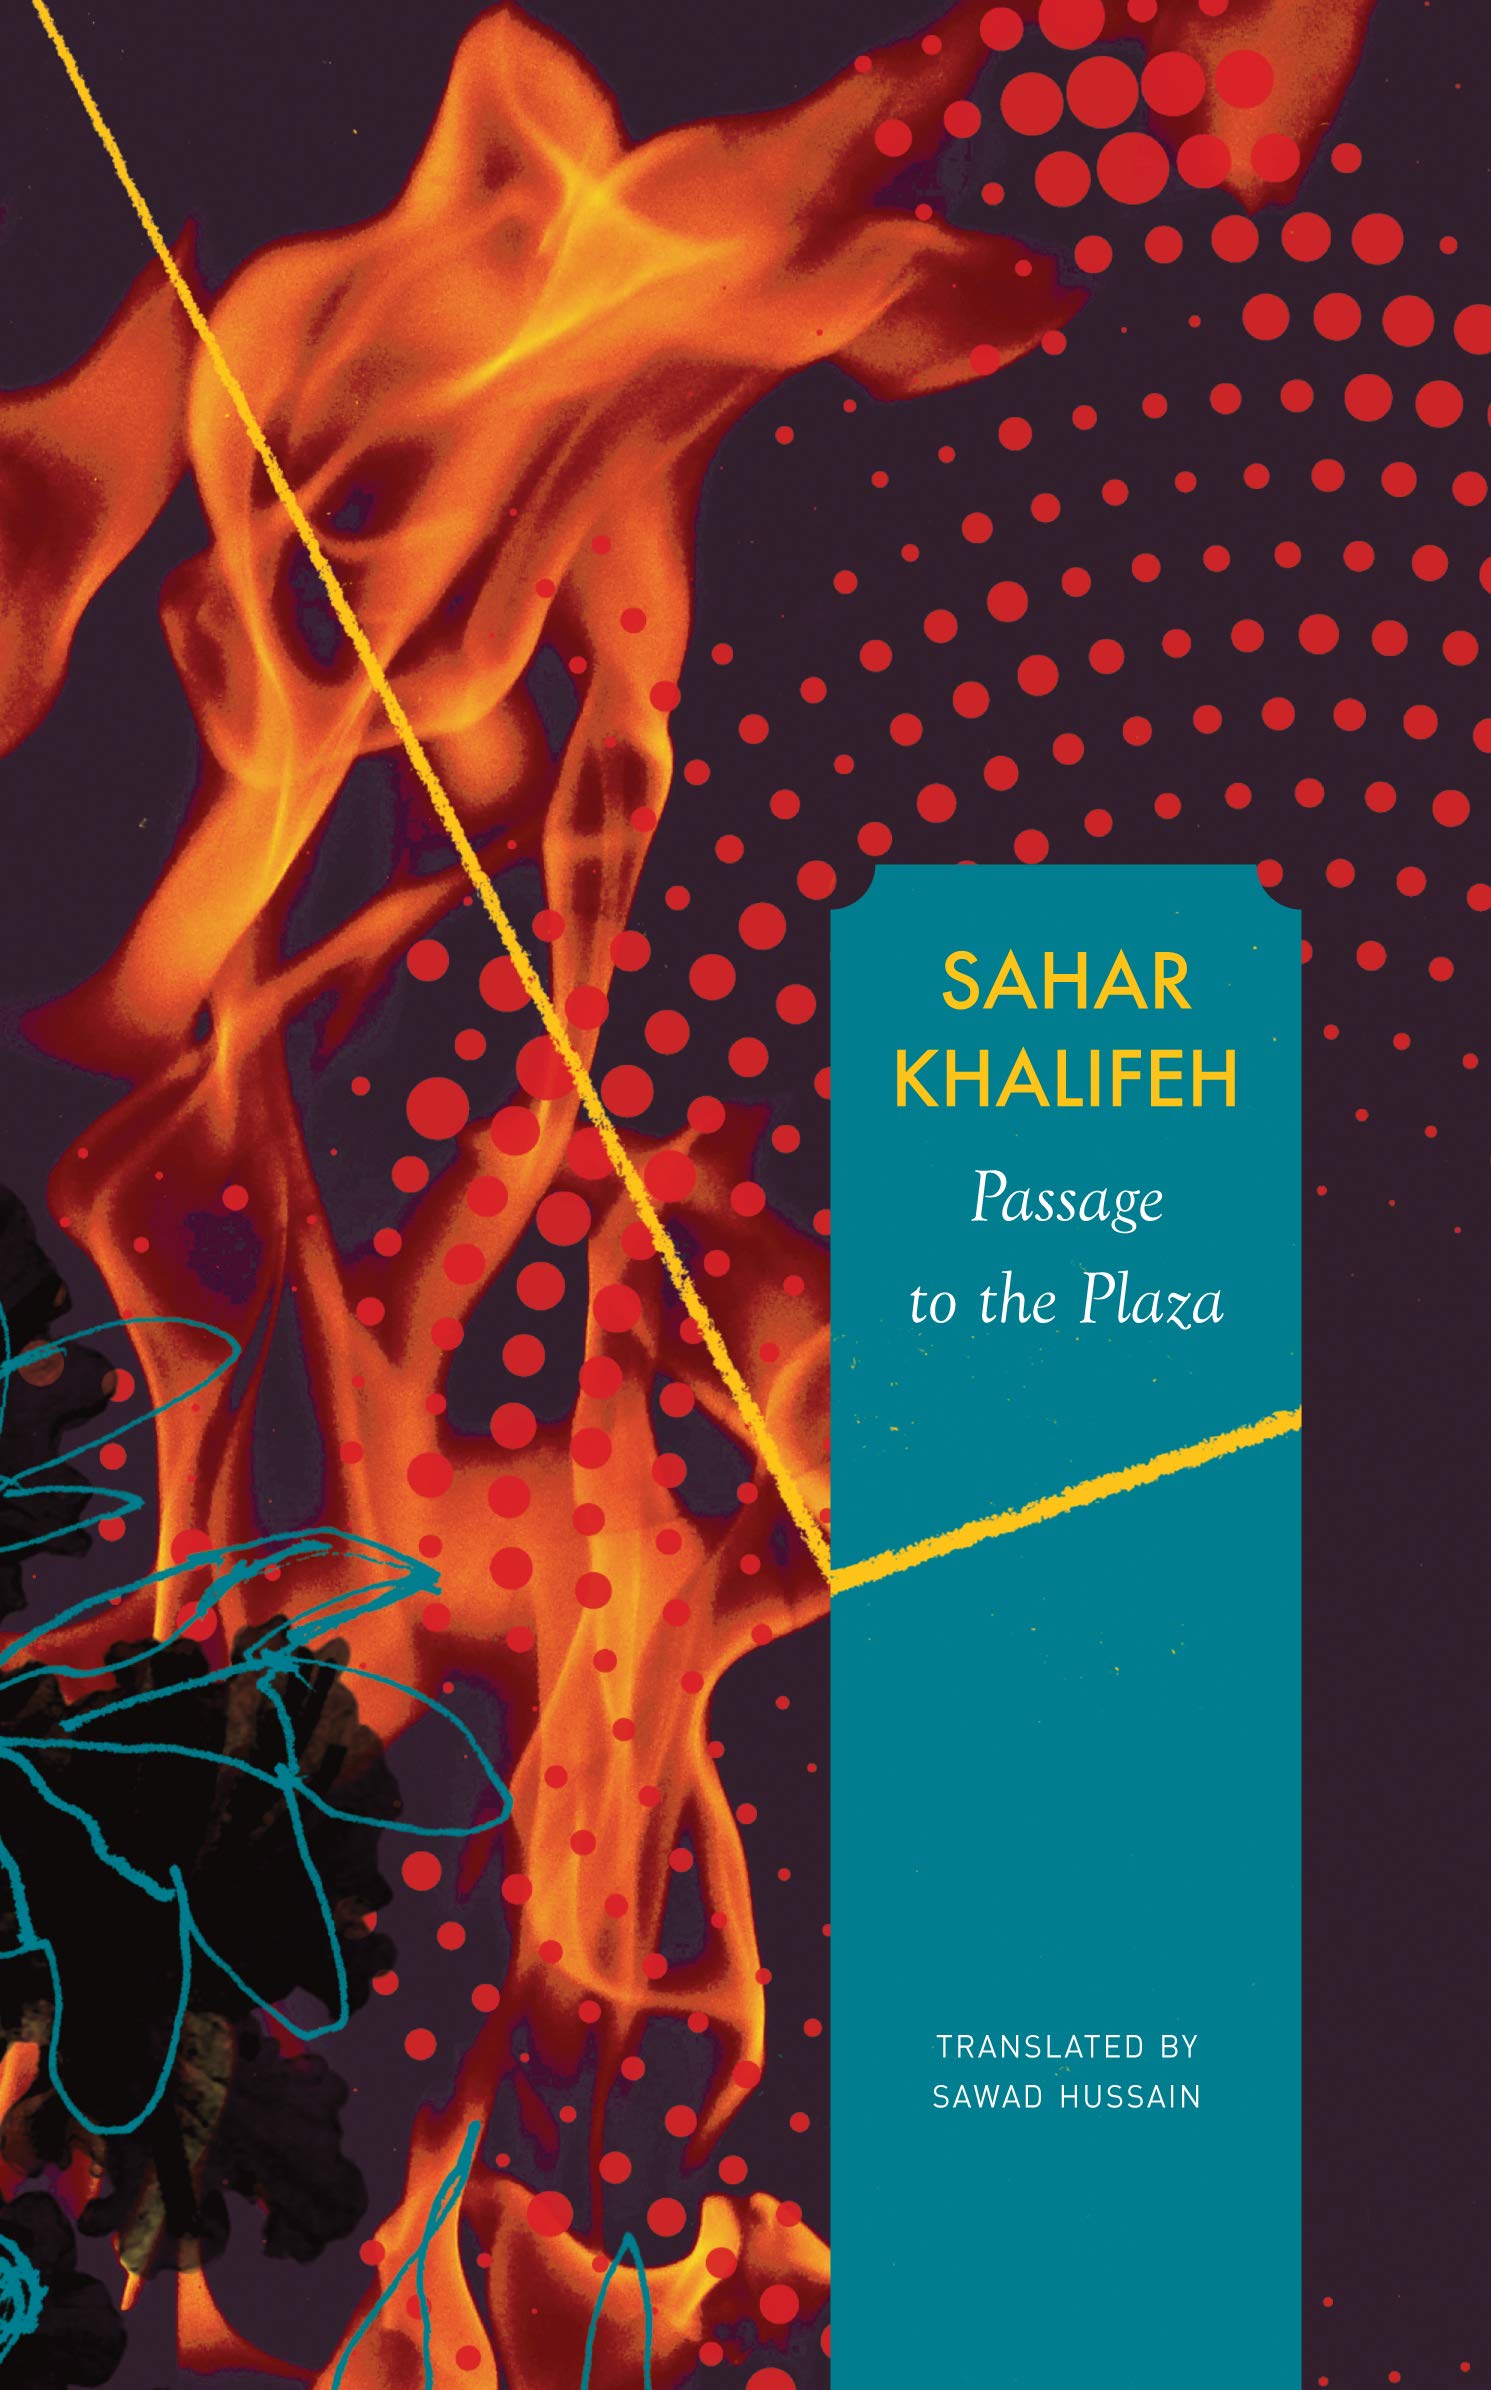 Buchcover Sahar Khalifeh: "Passage to the Plaza" im Verlag Seagull Books